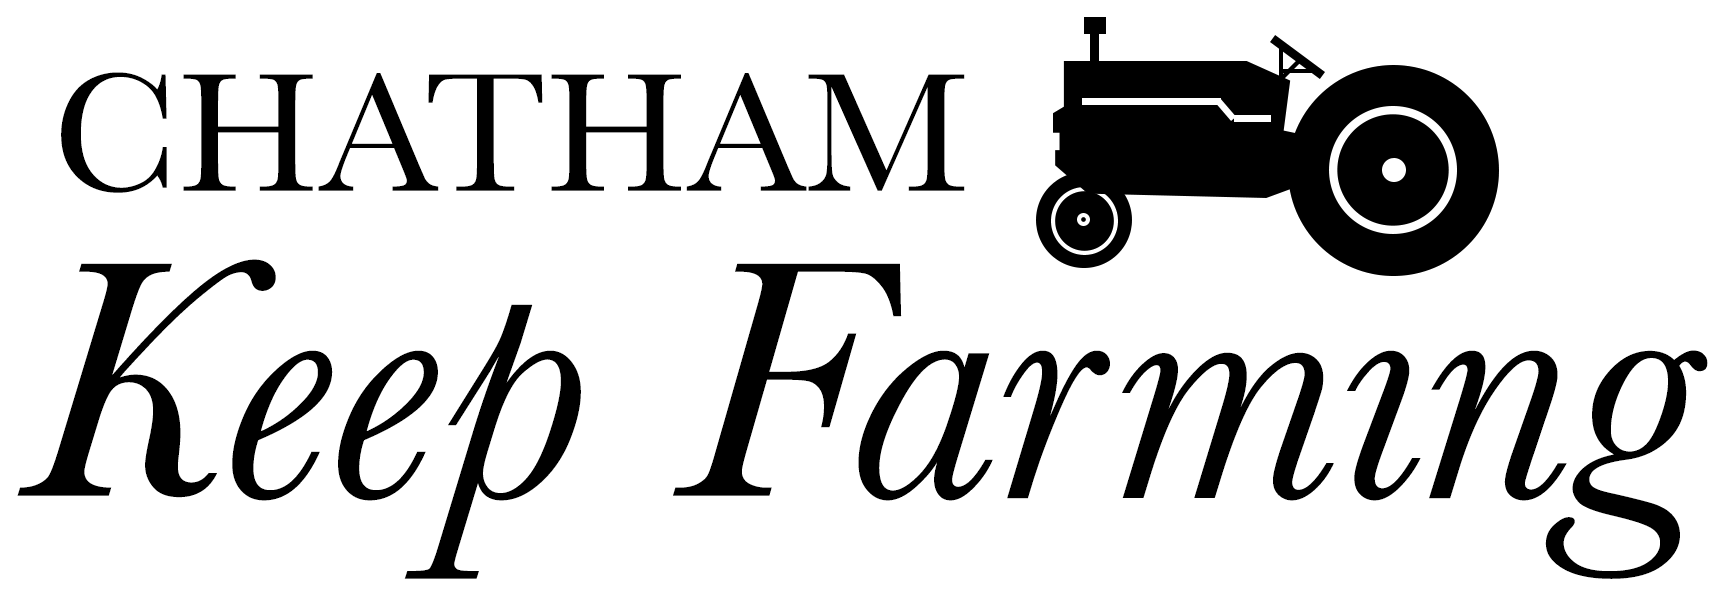 Chatham Keep Farming